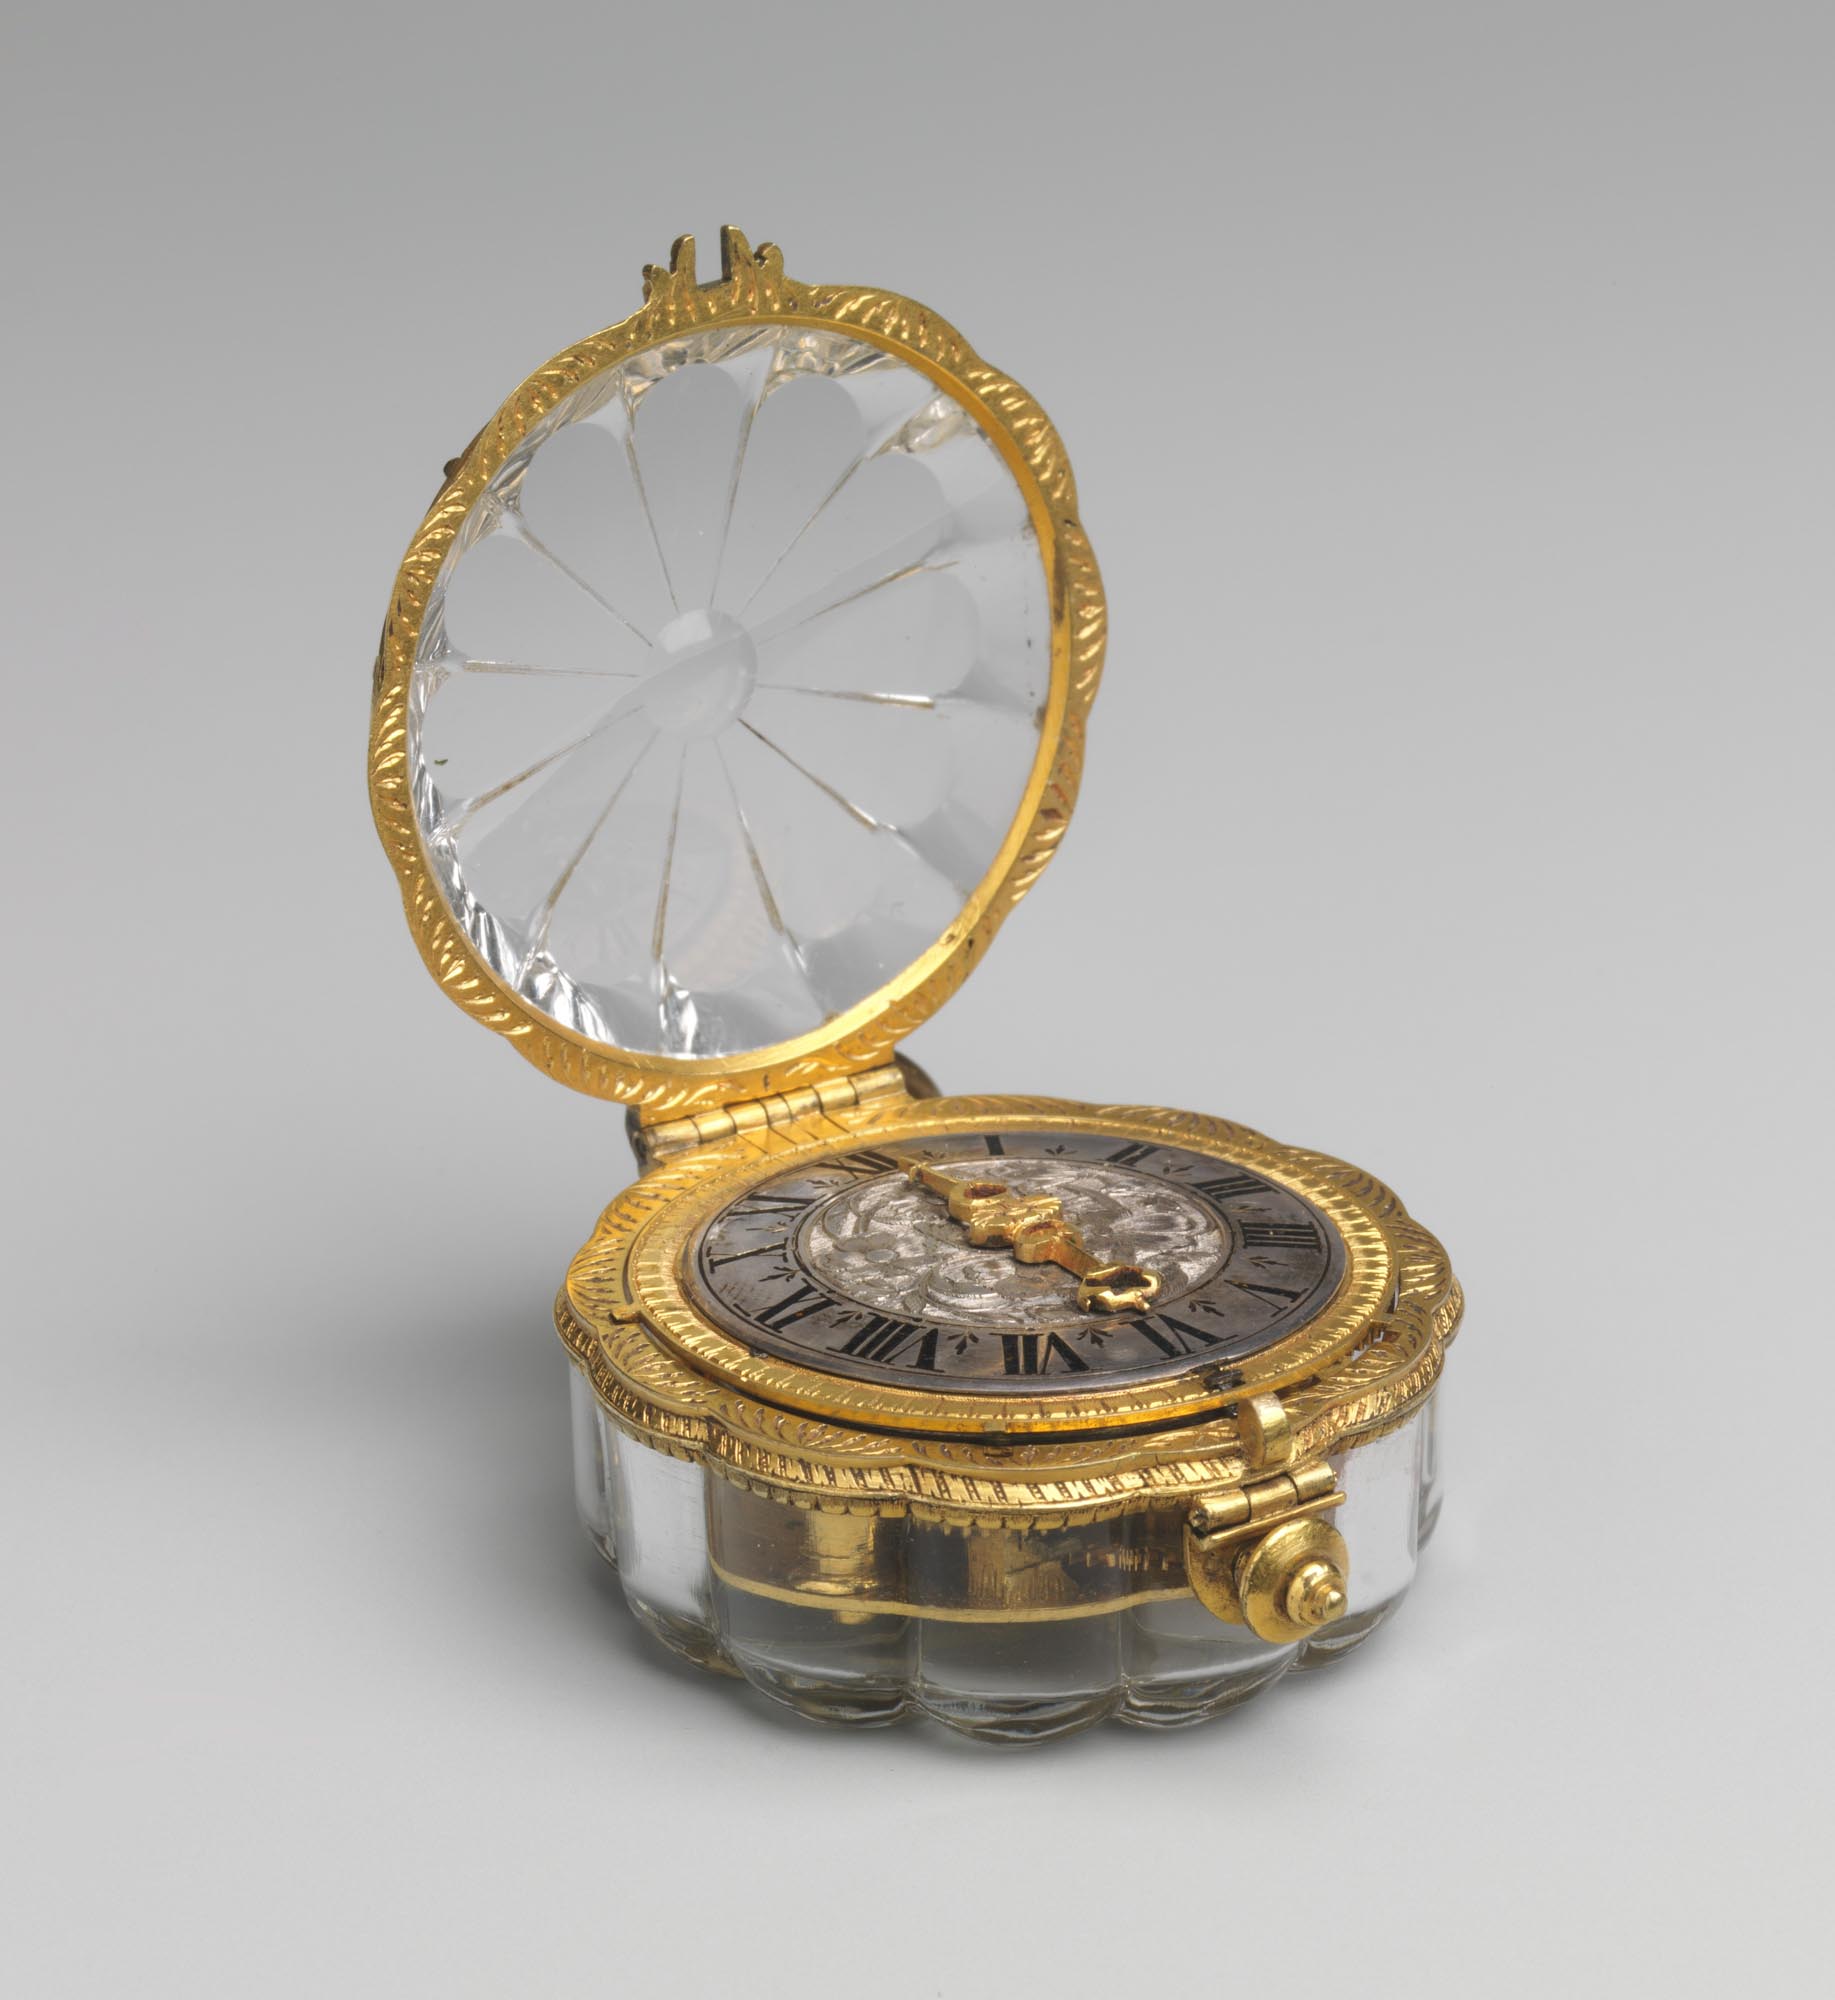 Rock Crystal Mounted in Gilded Brass Watch by Jean Rousseau (ca. 1650 – 60)